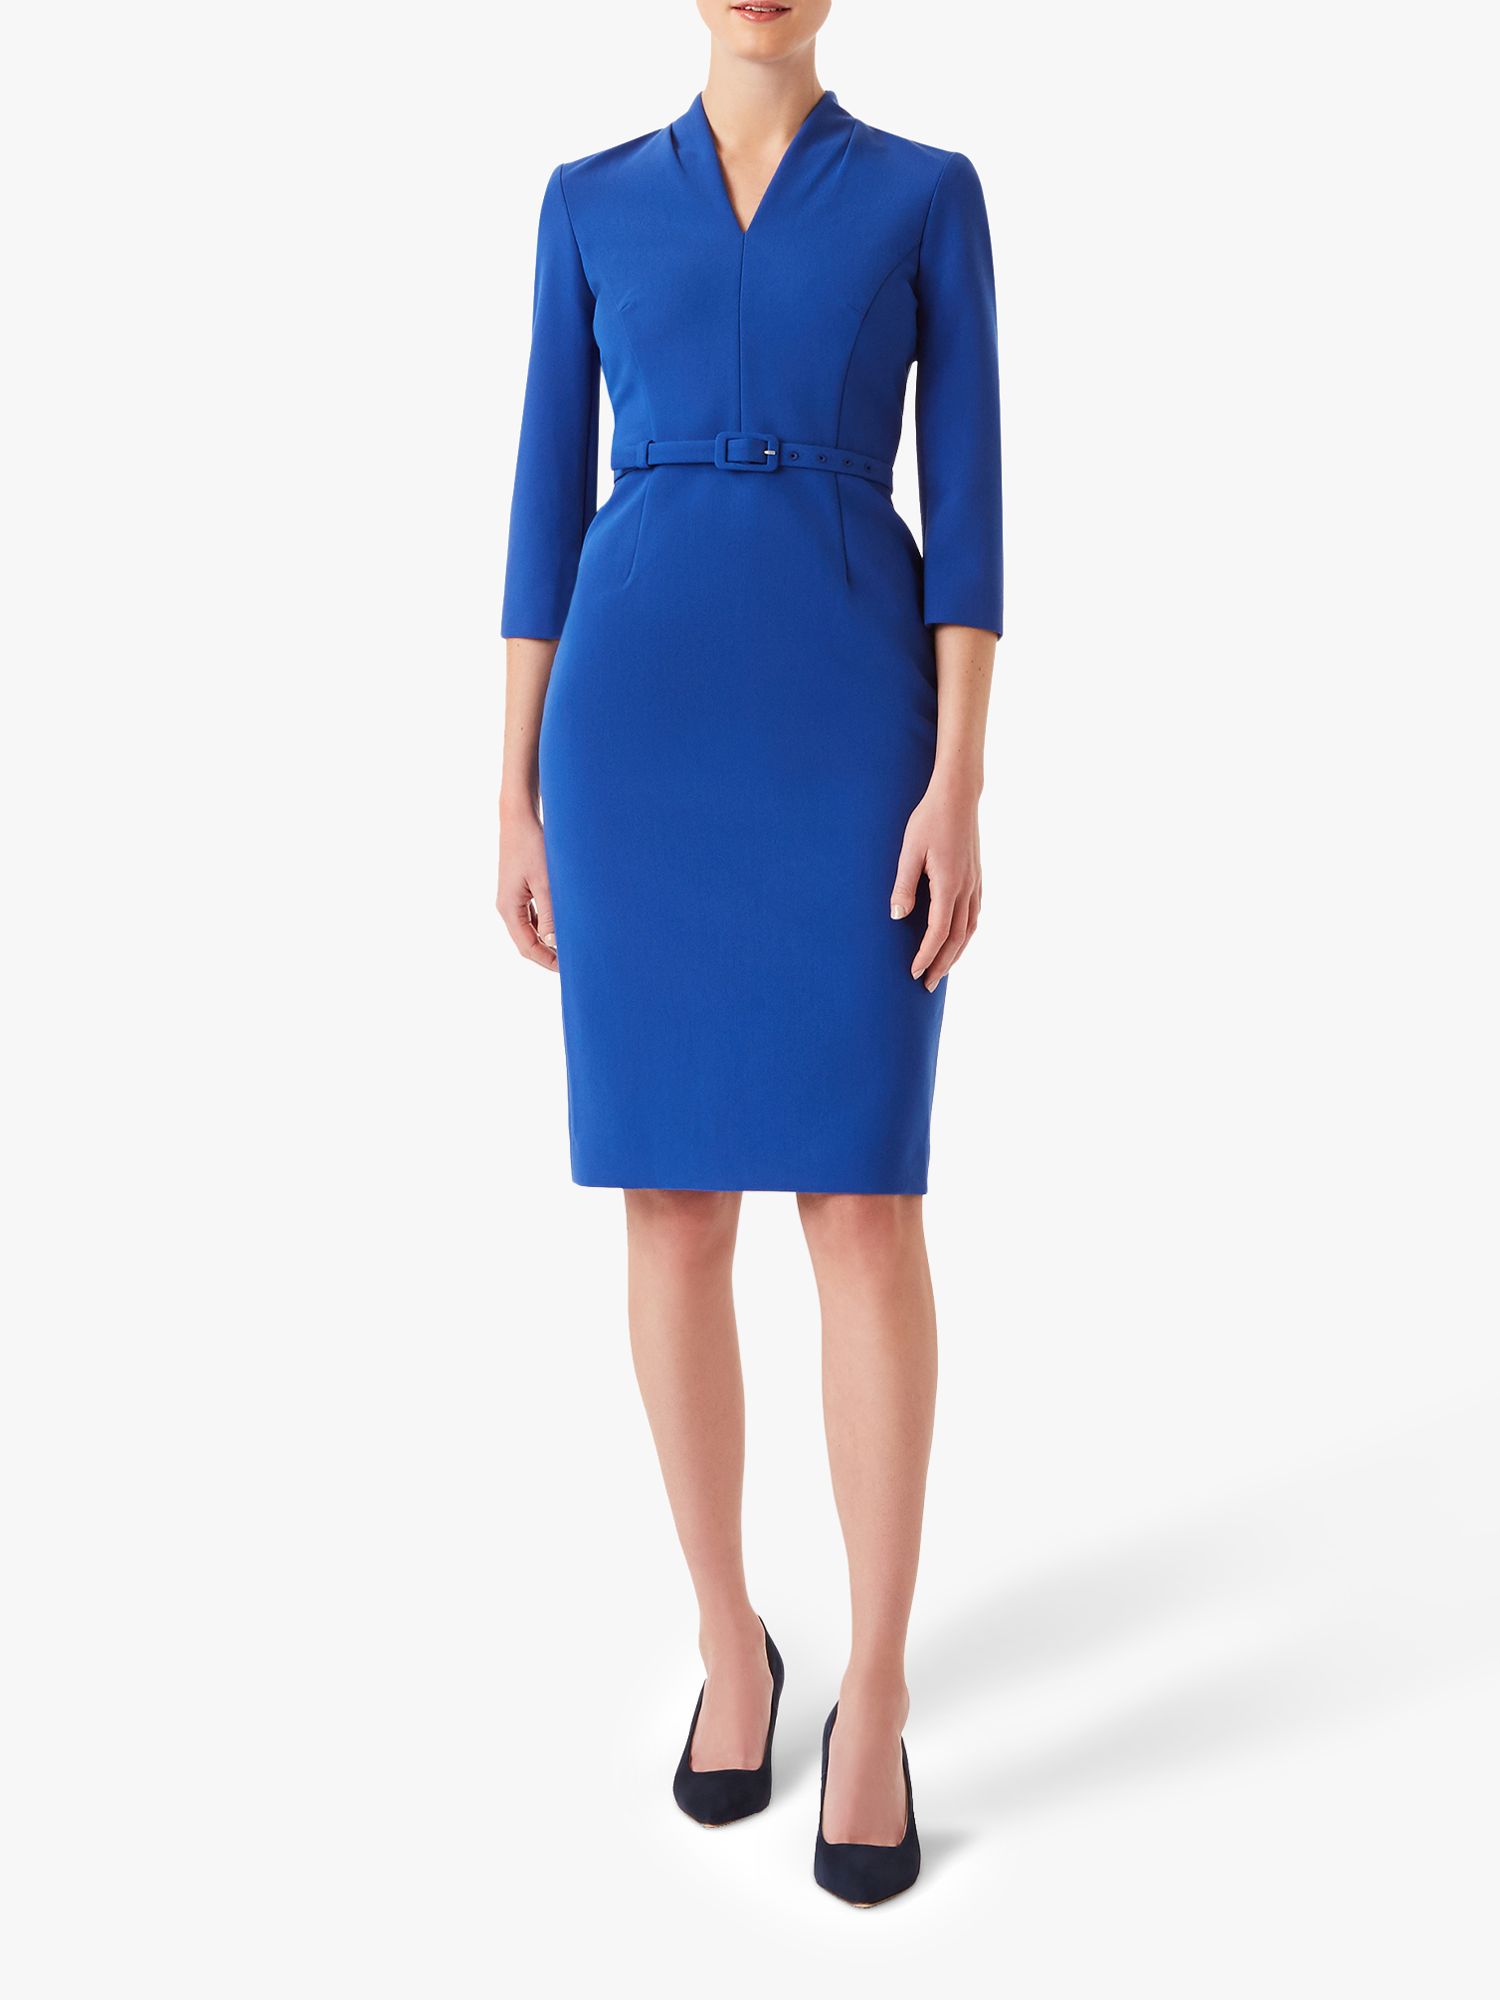 Hobbs Dianna Dress, Cobalt Blue at John Lewis & Partners